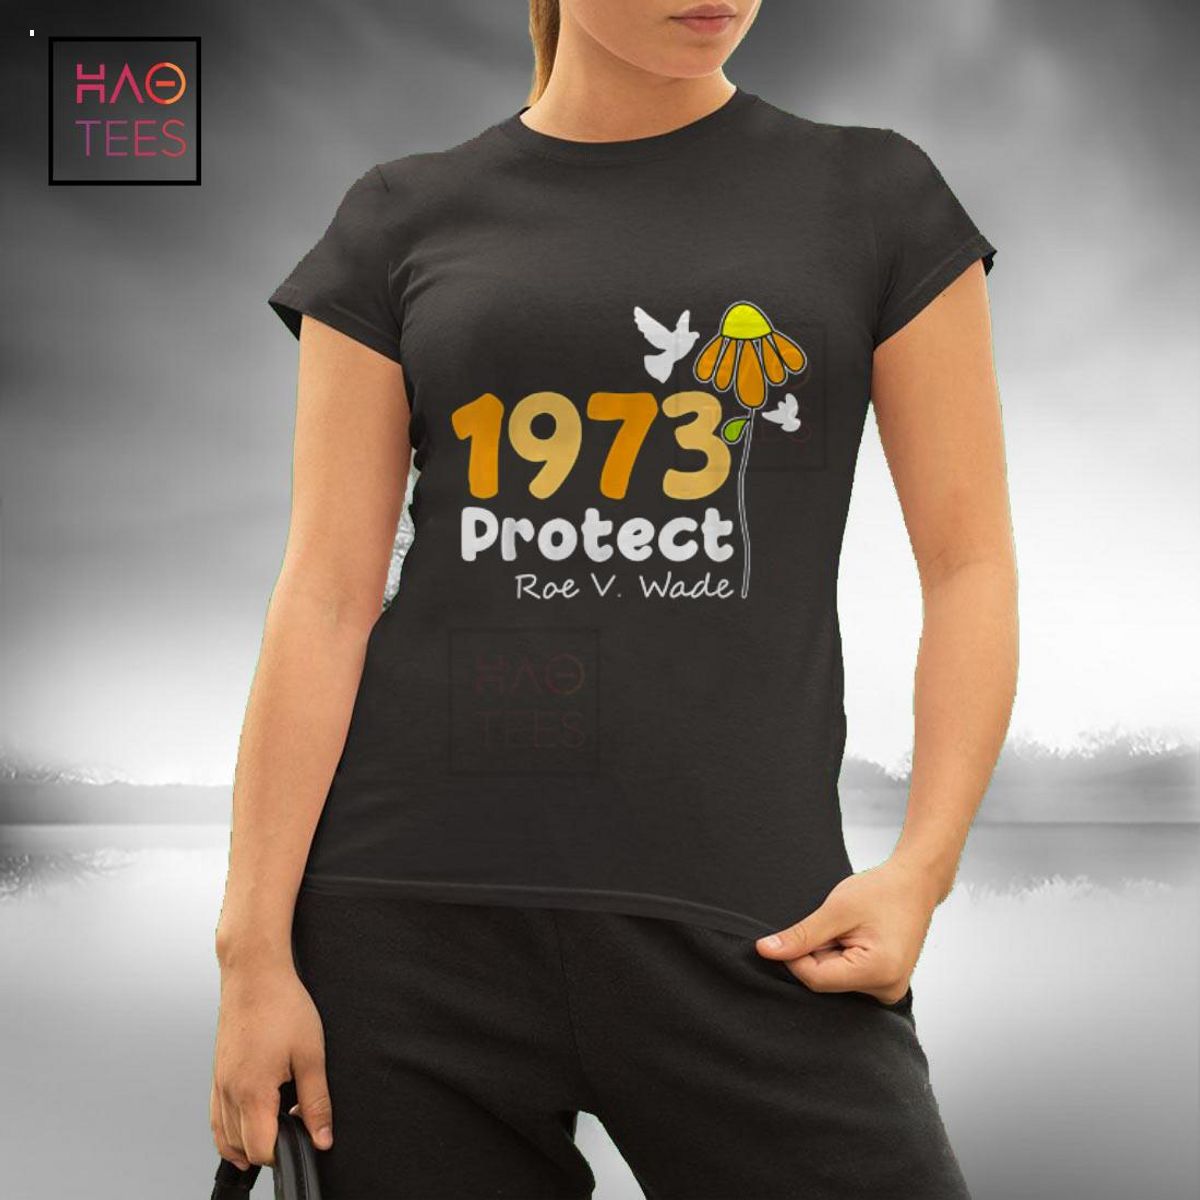 Protect Roe V. Wade 1973 Pro Choice Feminist Women's Rights Shirt